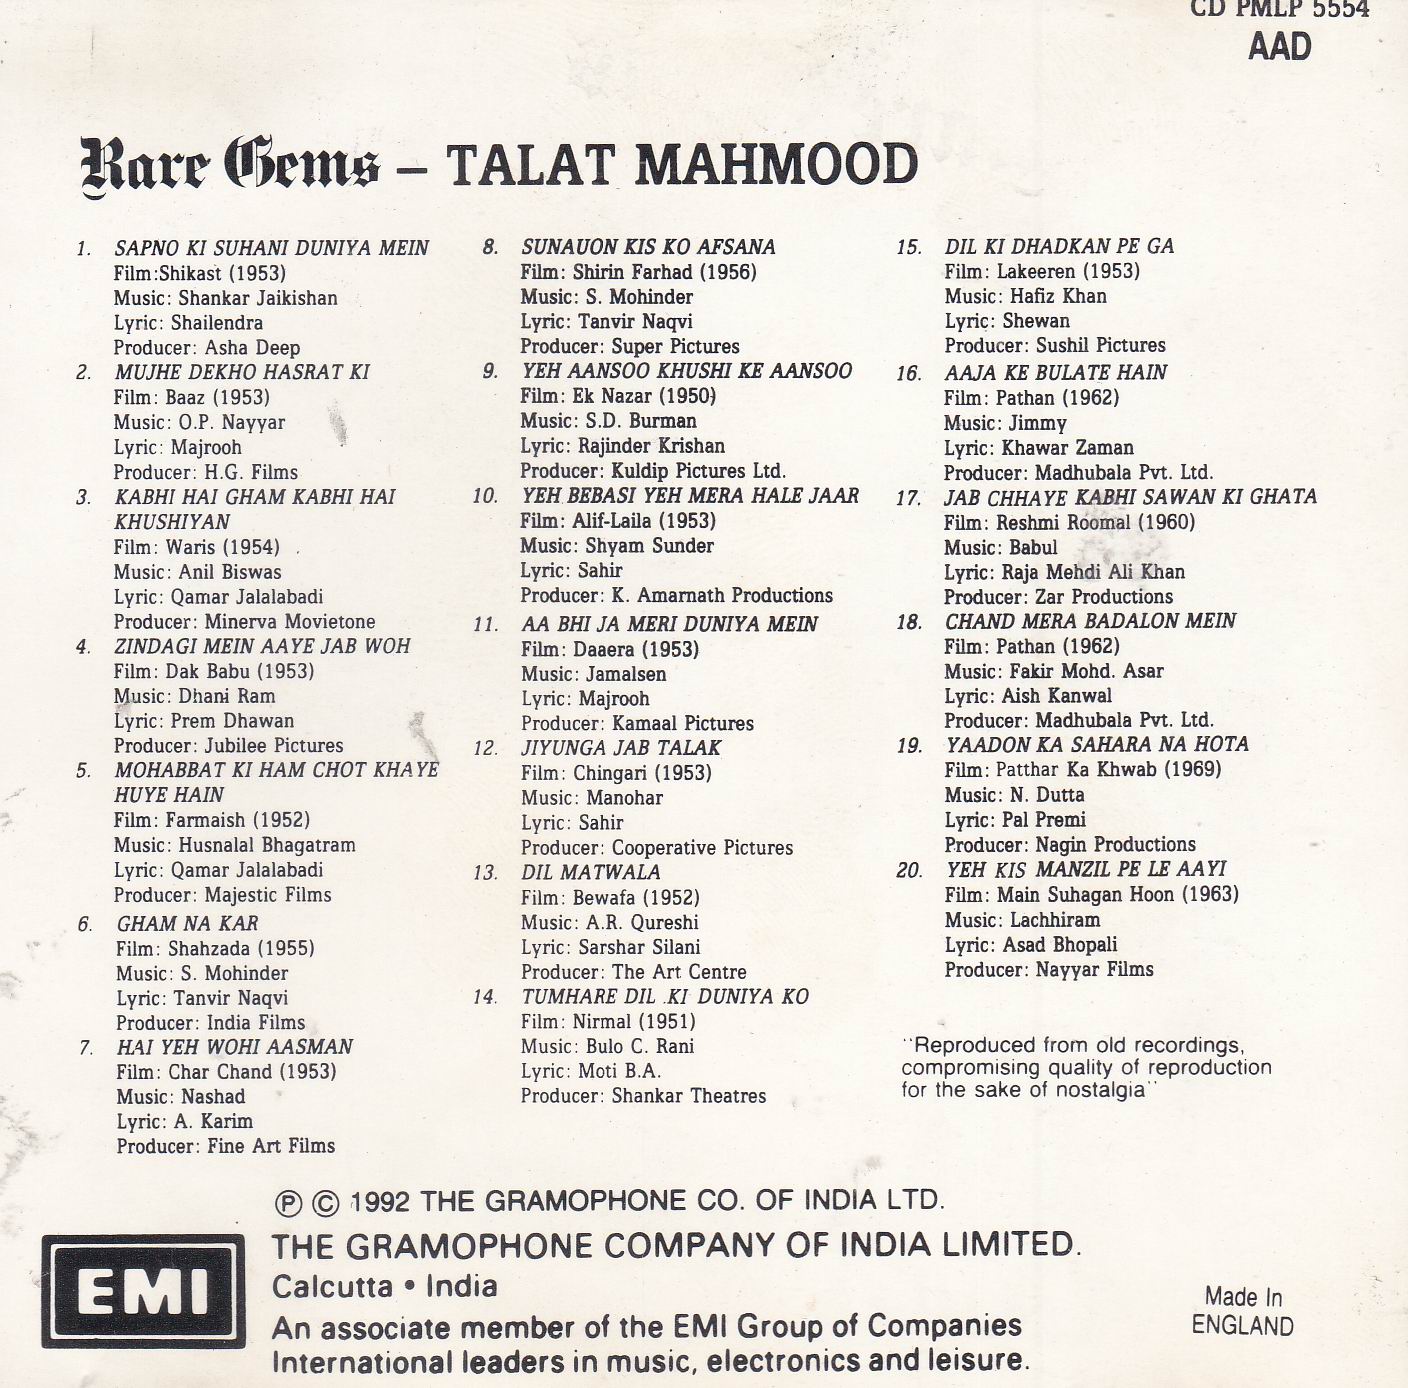 Rare Gems Talat Mahmood EMI CD - Click Image to Close